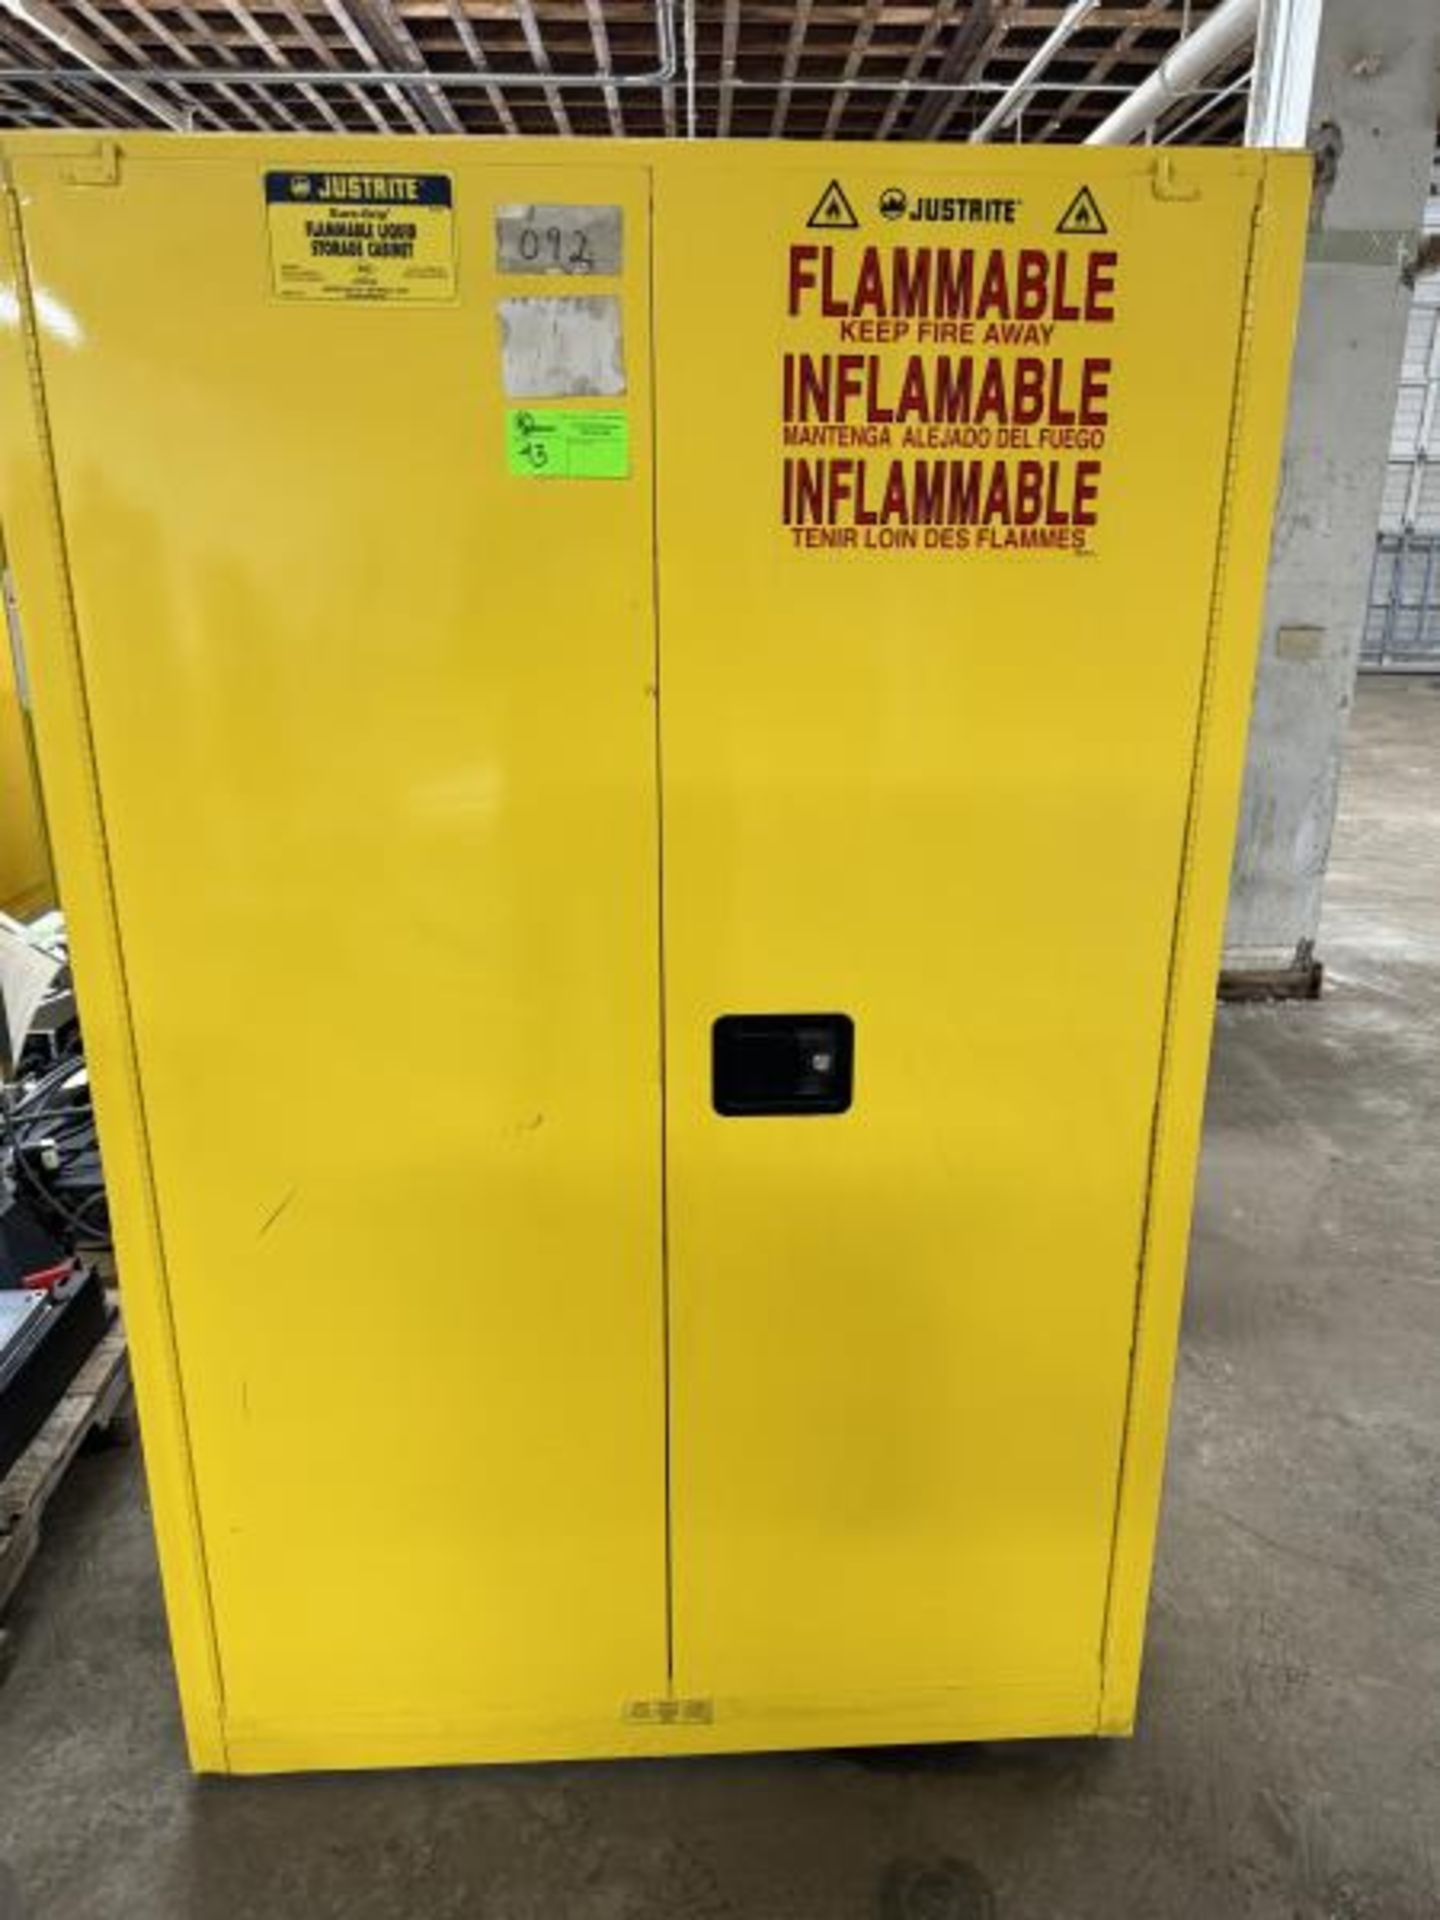 Justrite Flammable Liquid Storage Cabinet 43" Wide x 18" Deep x 65" Tall